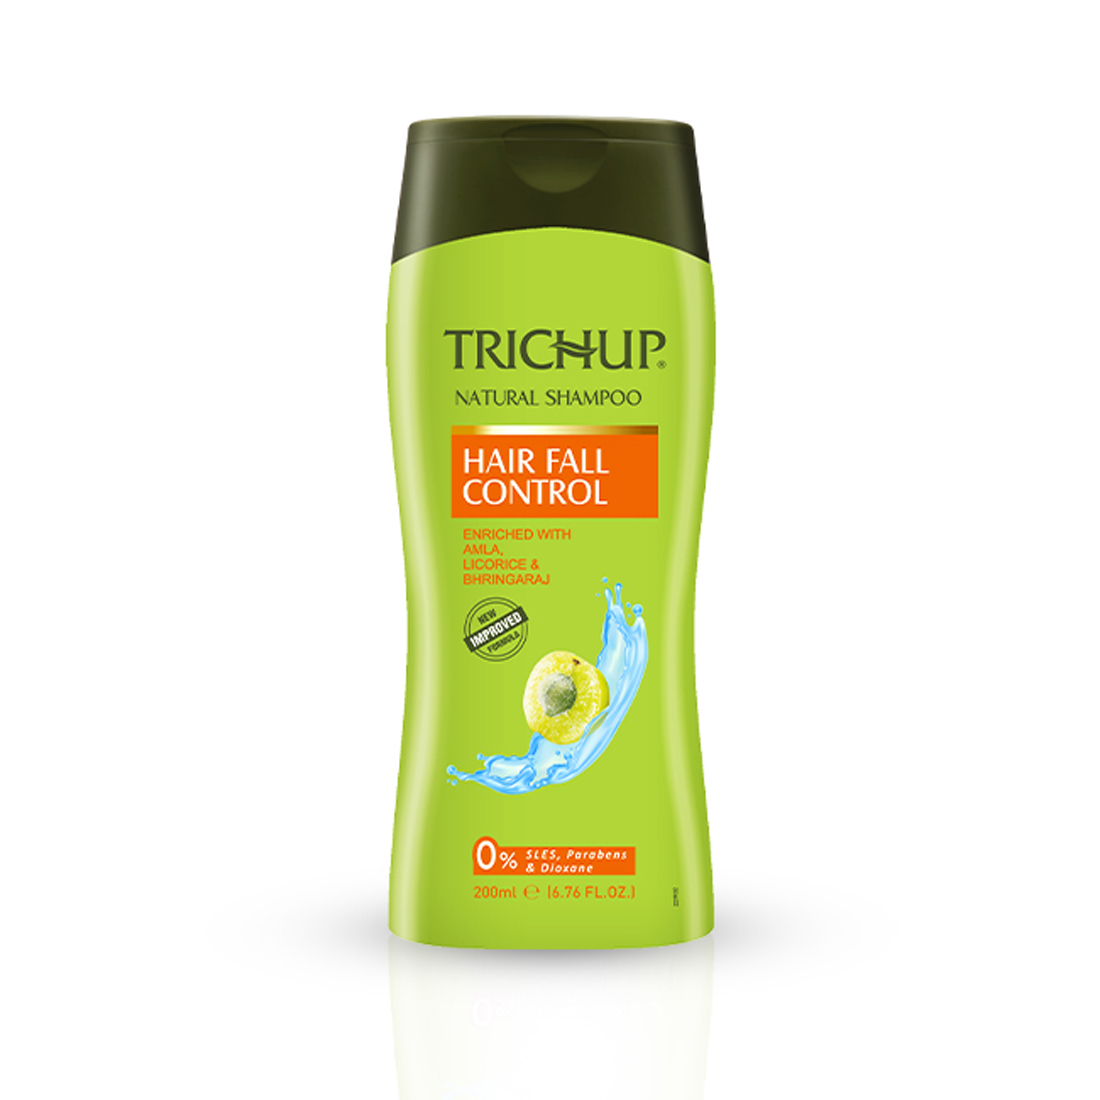 Buy Vasu Trichup Hair Fall Control Shampoo at Best Price Online